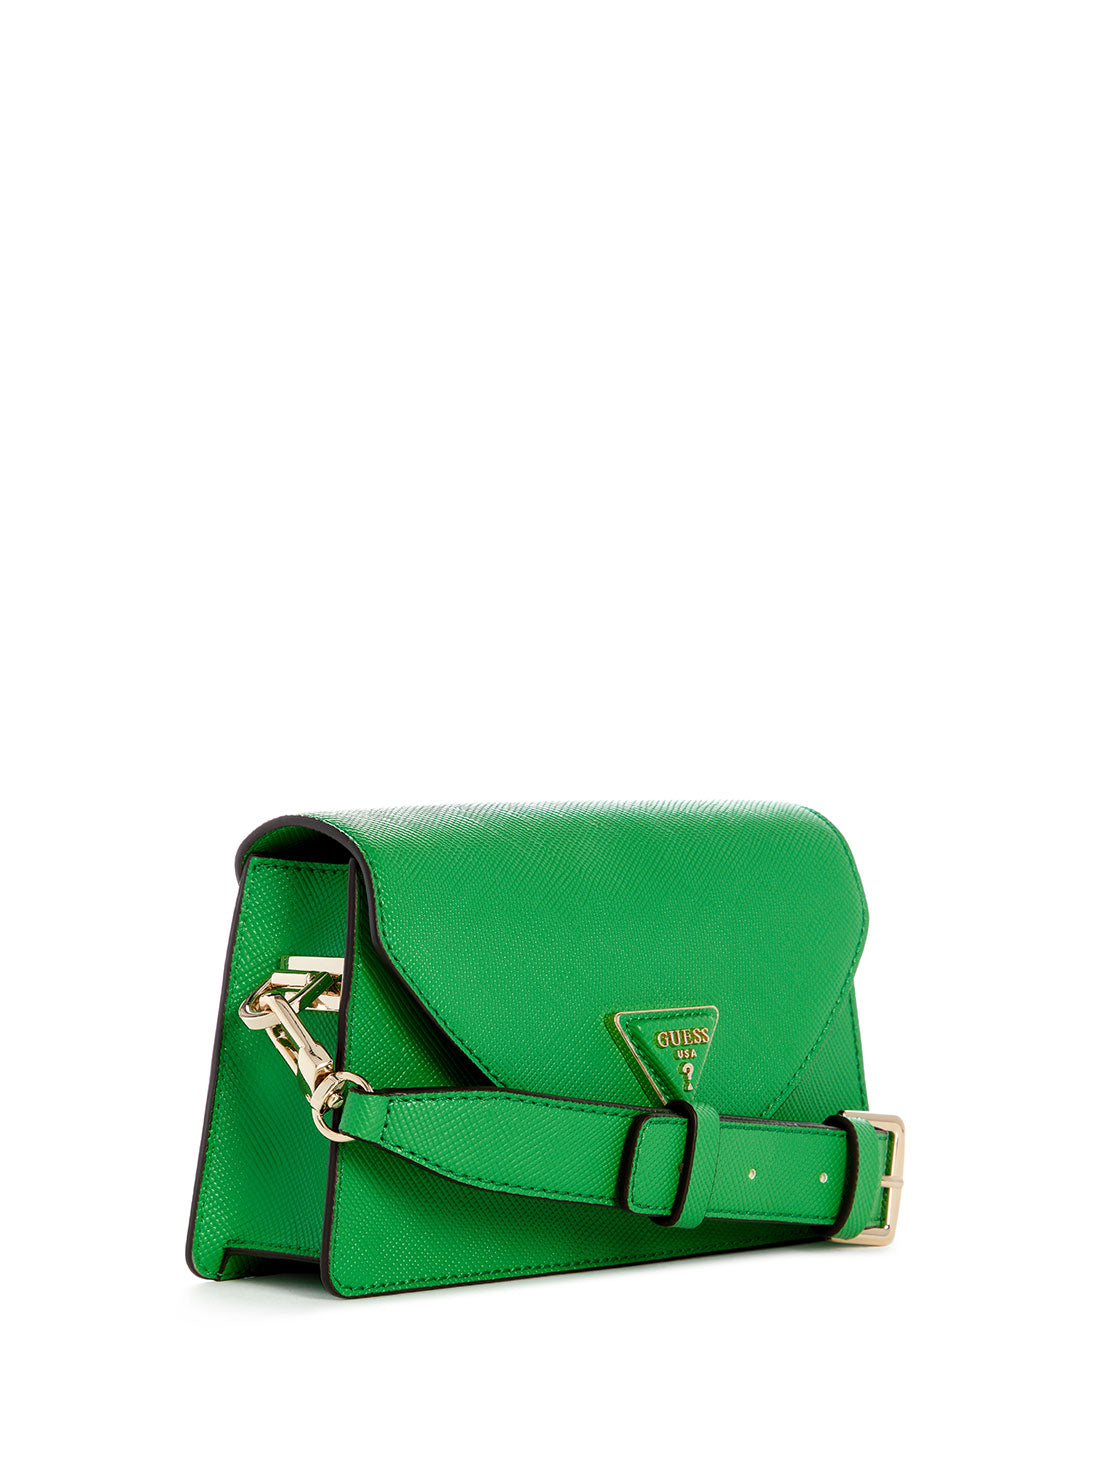 GUESS Green Avis Mini Shoulder Bag side view